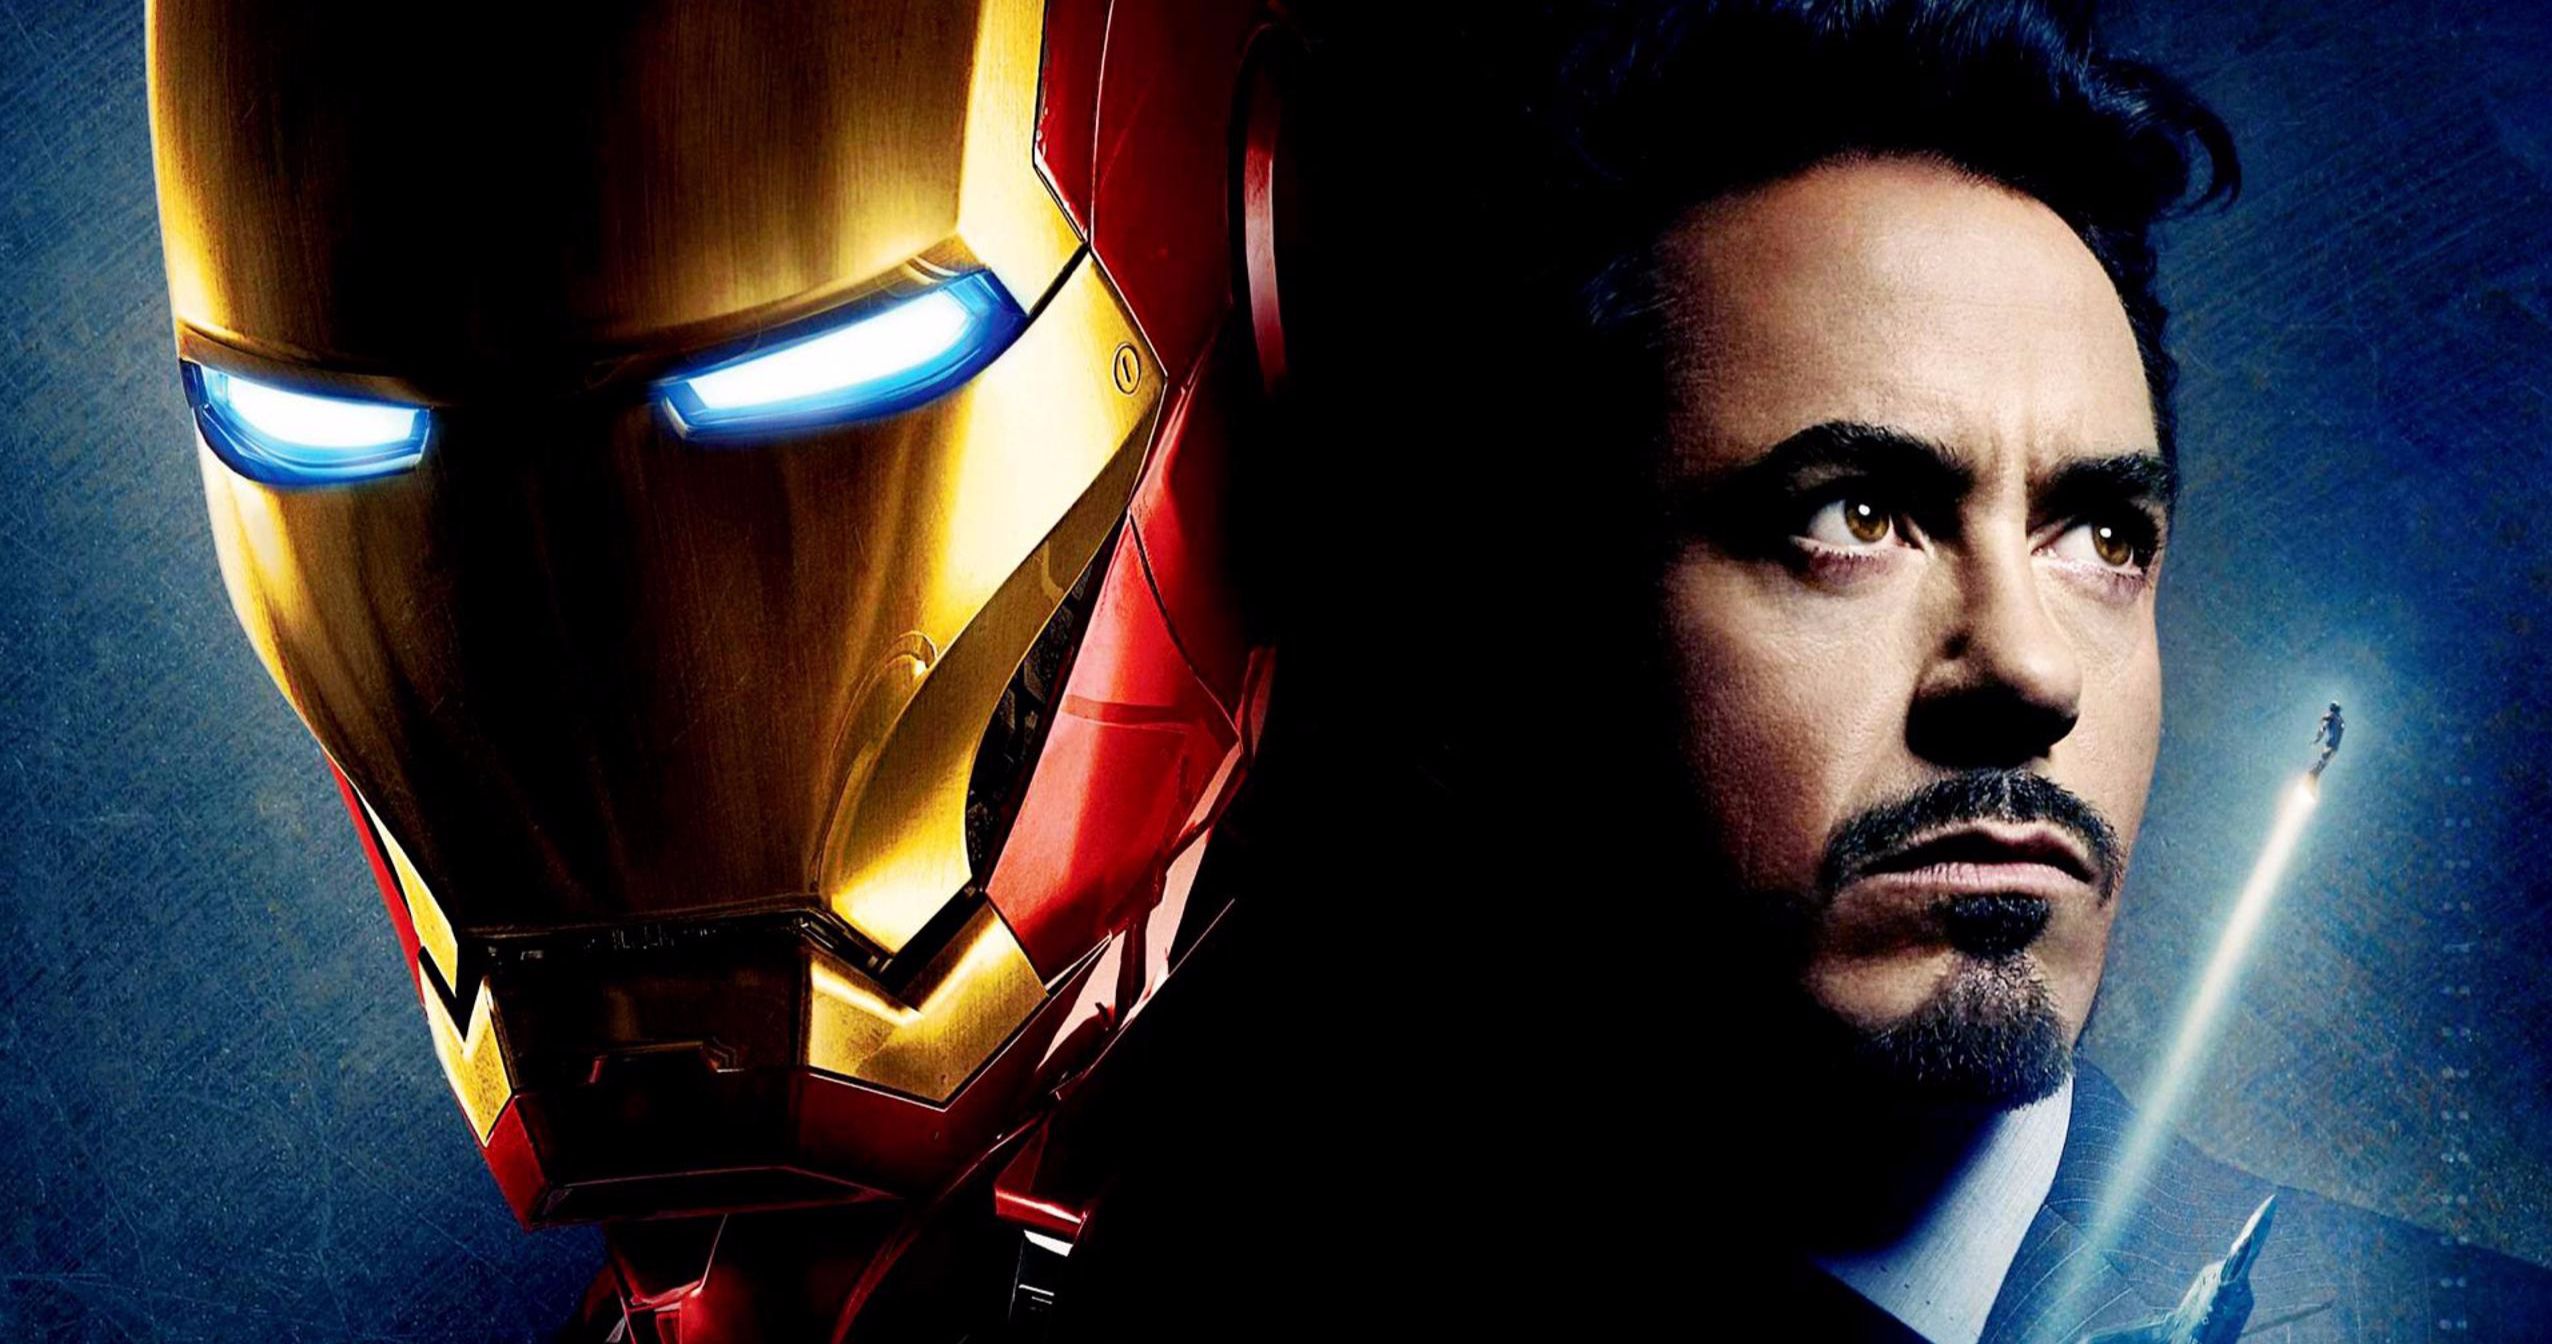 Original Iron Man Helmet Left Robert Downey Jr. Blinded On Set While Shooting